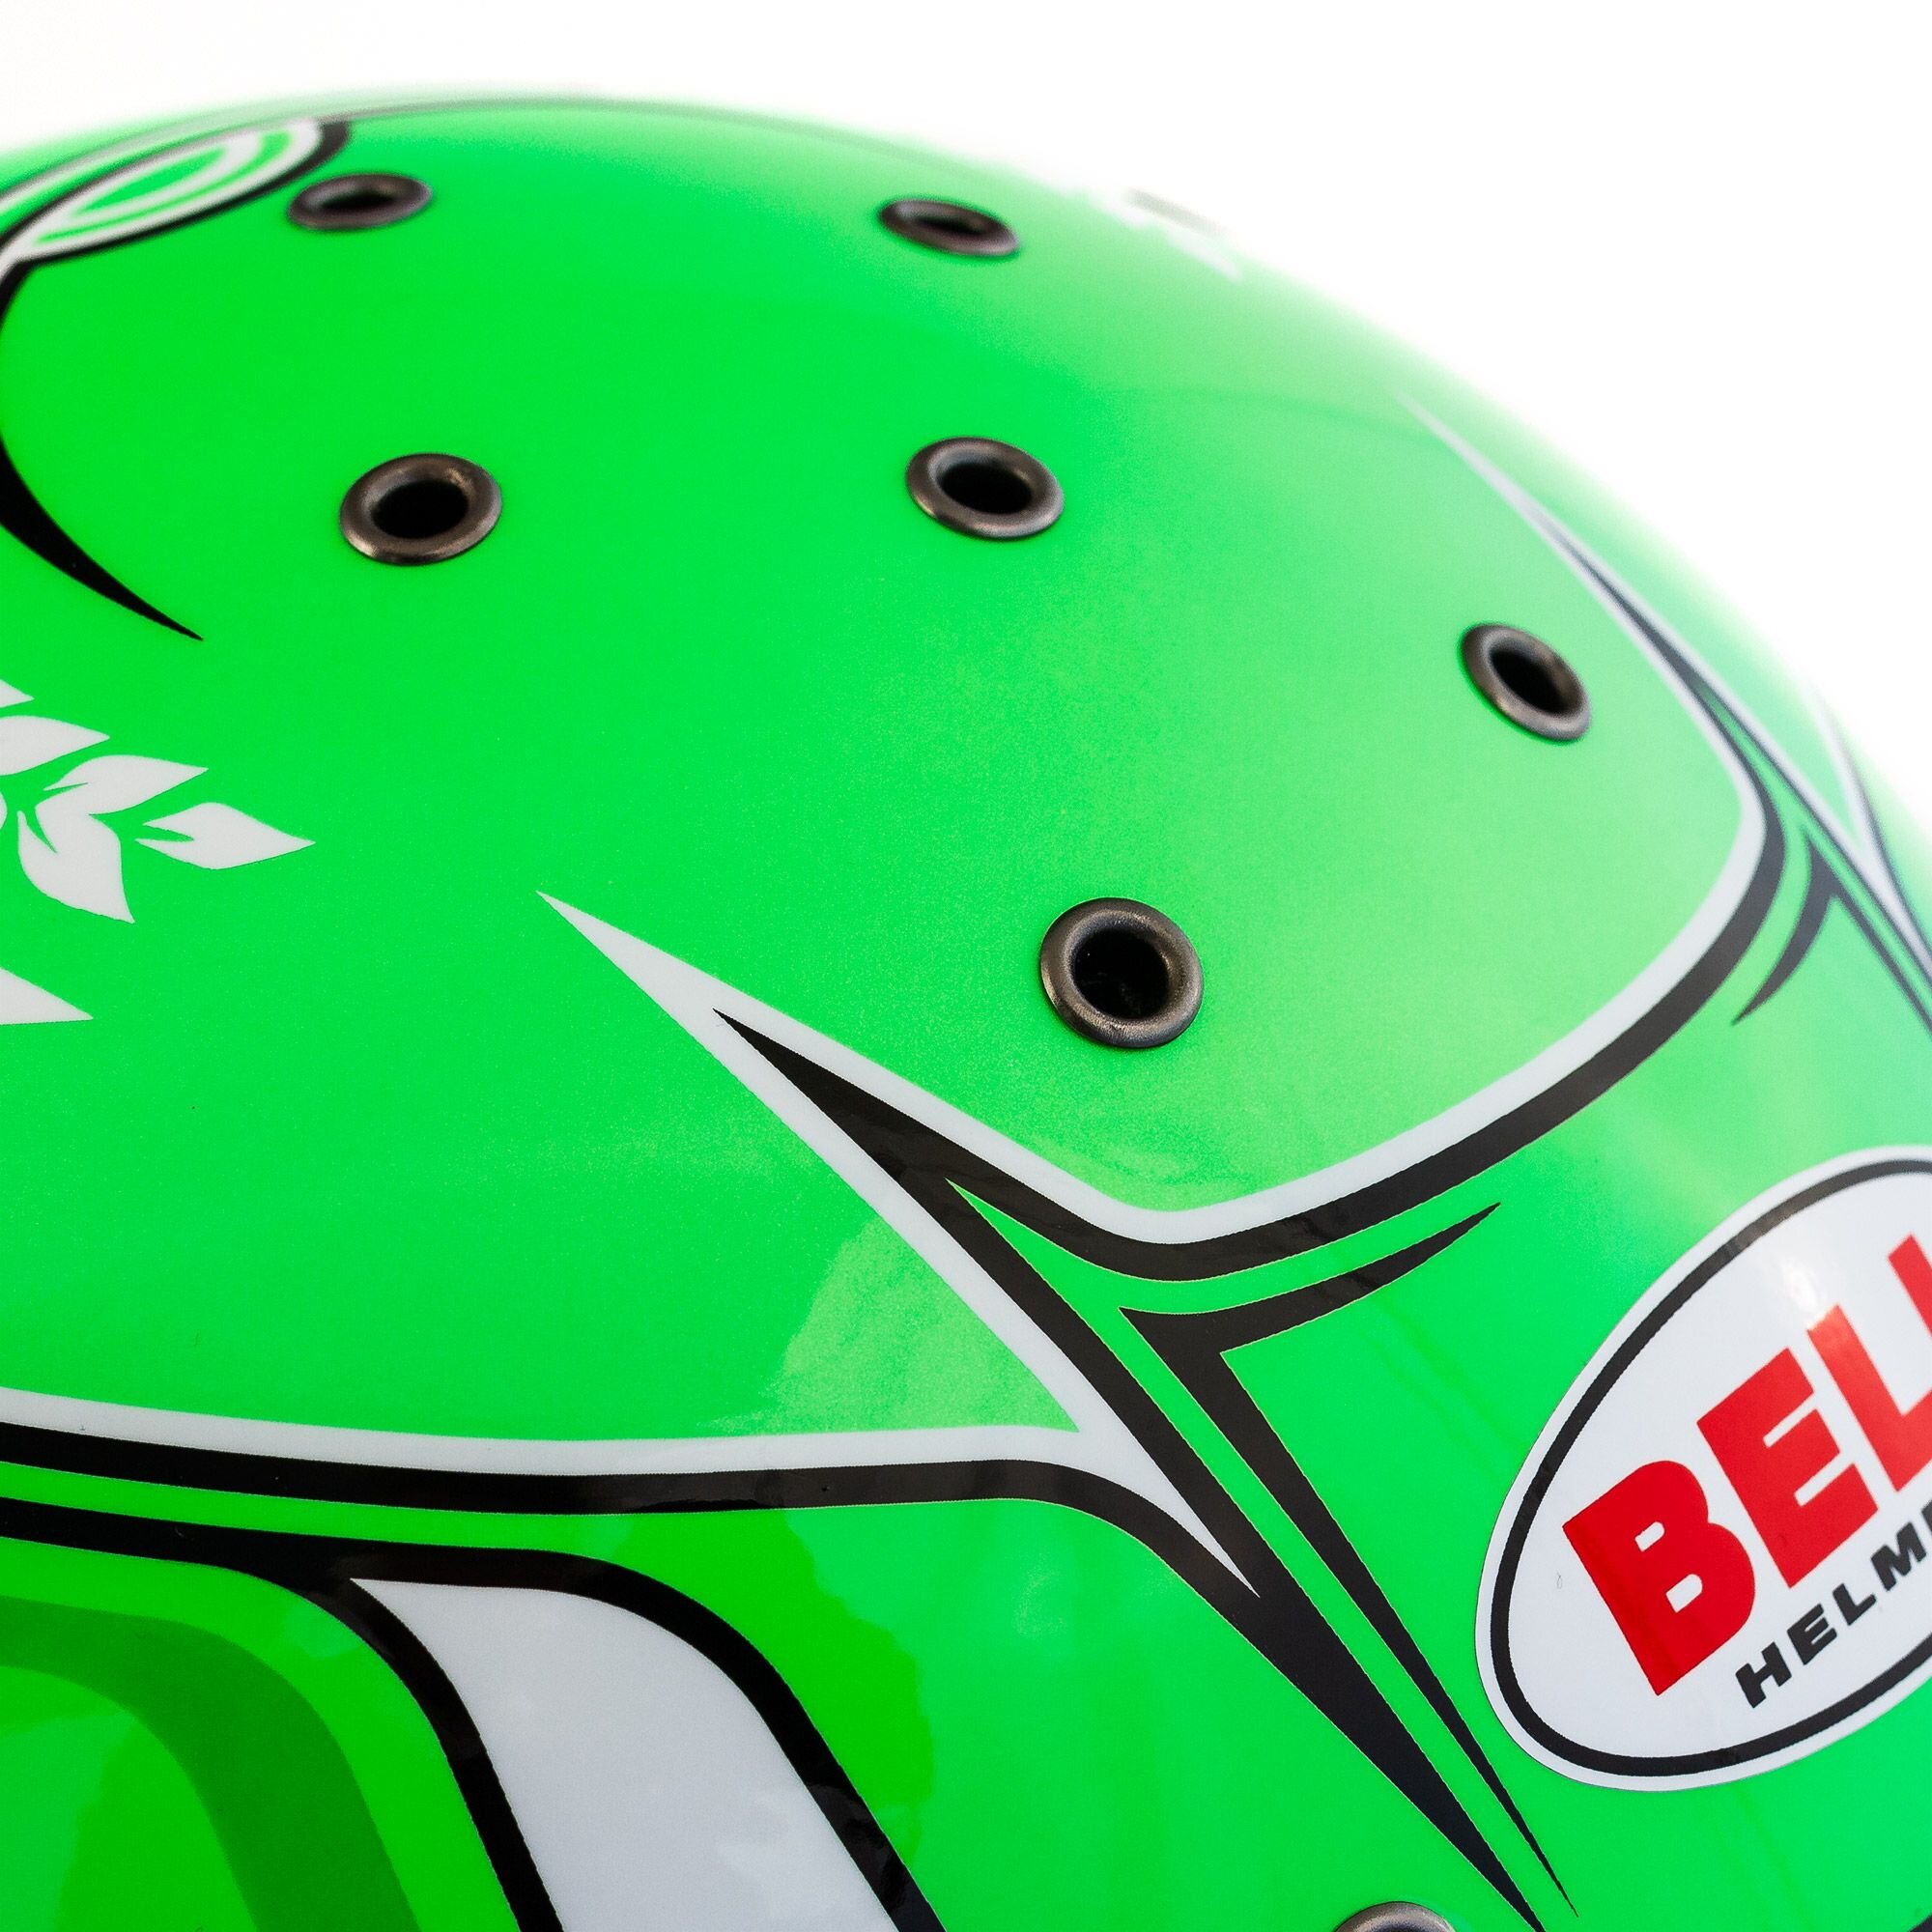 Hjelm Bell KC7 CMR Champion Green